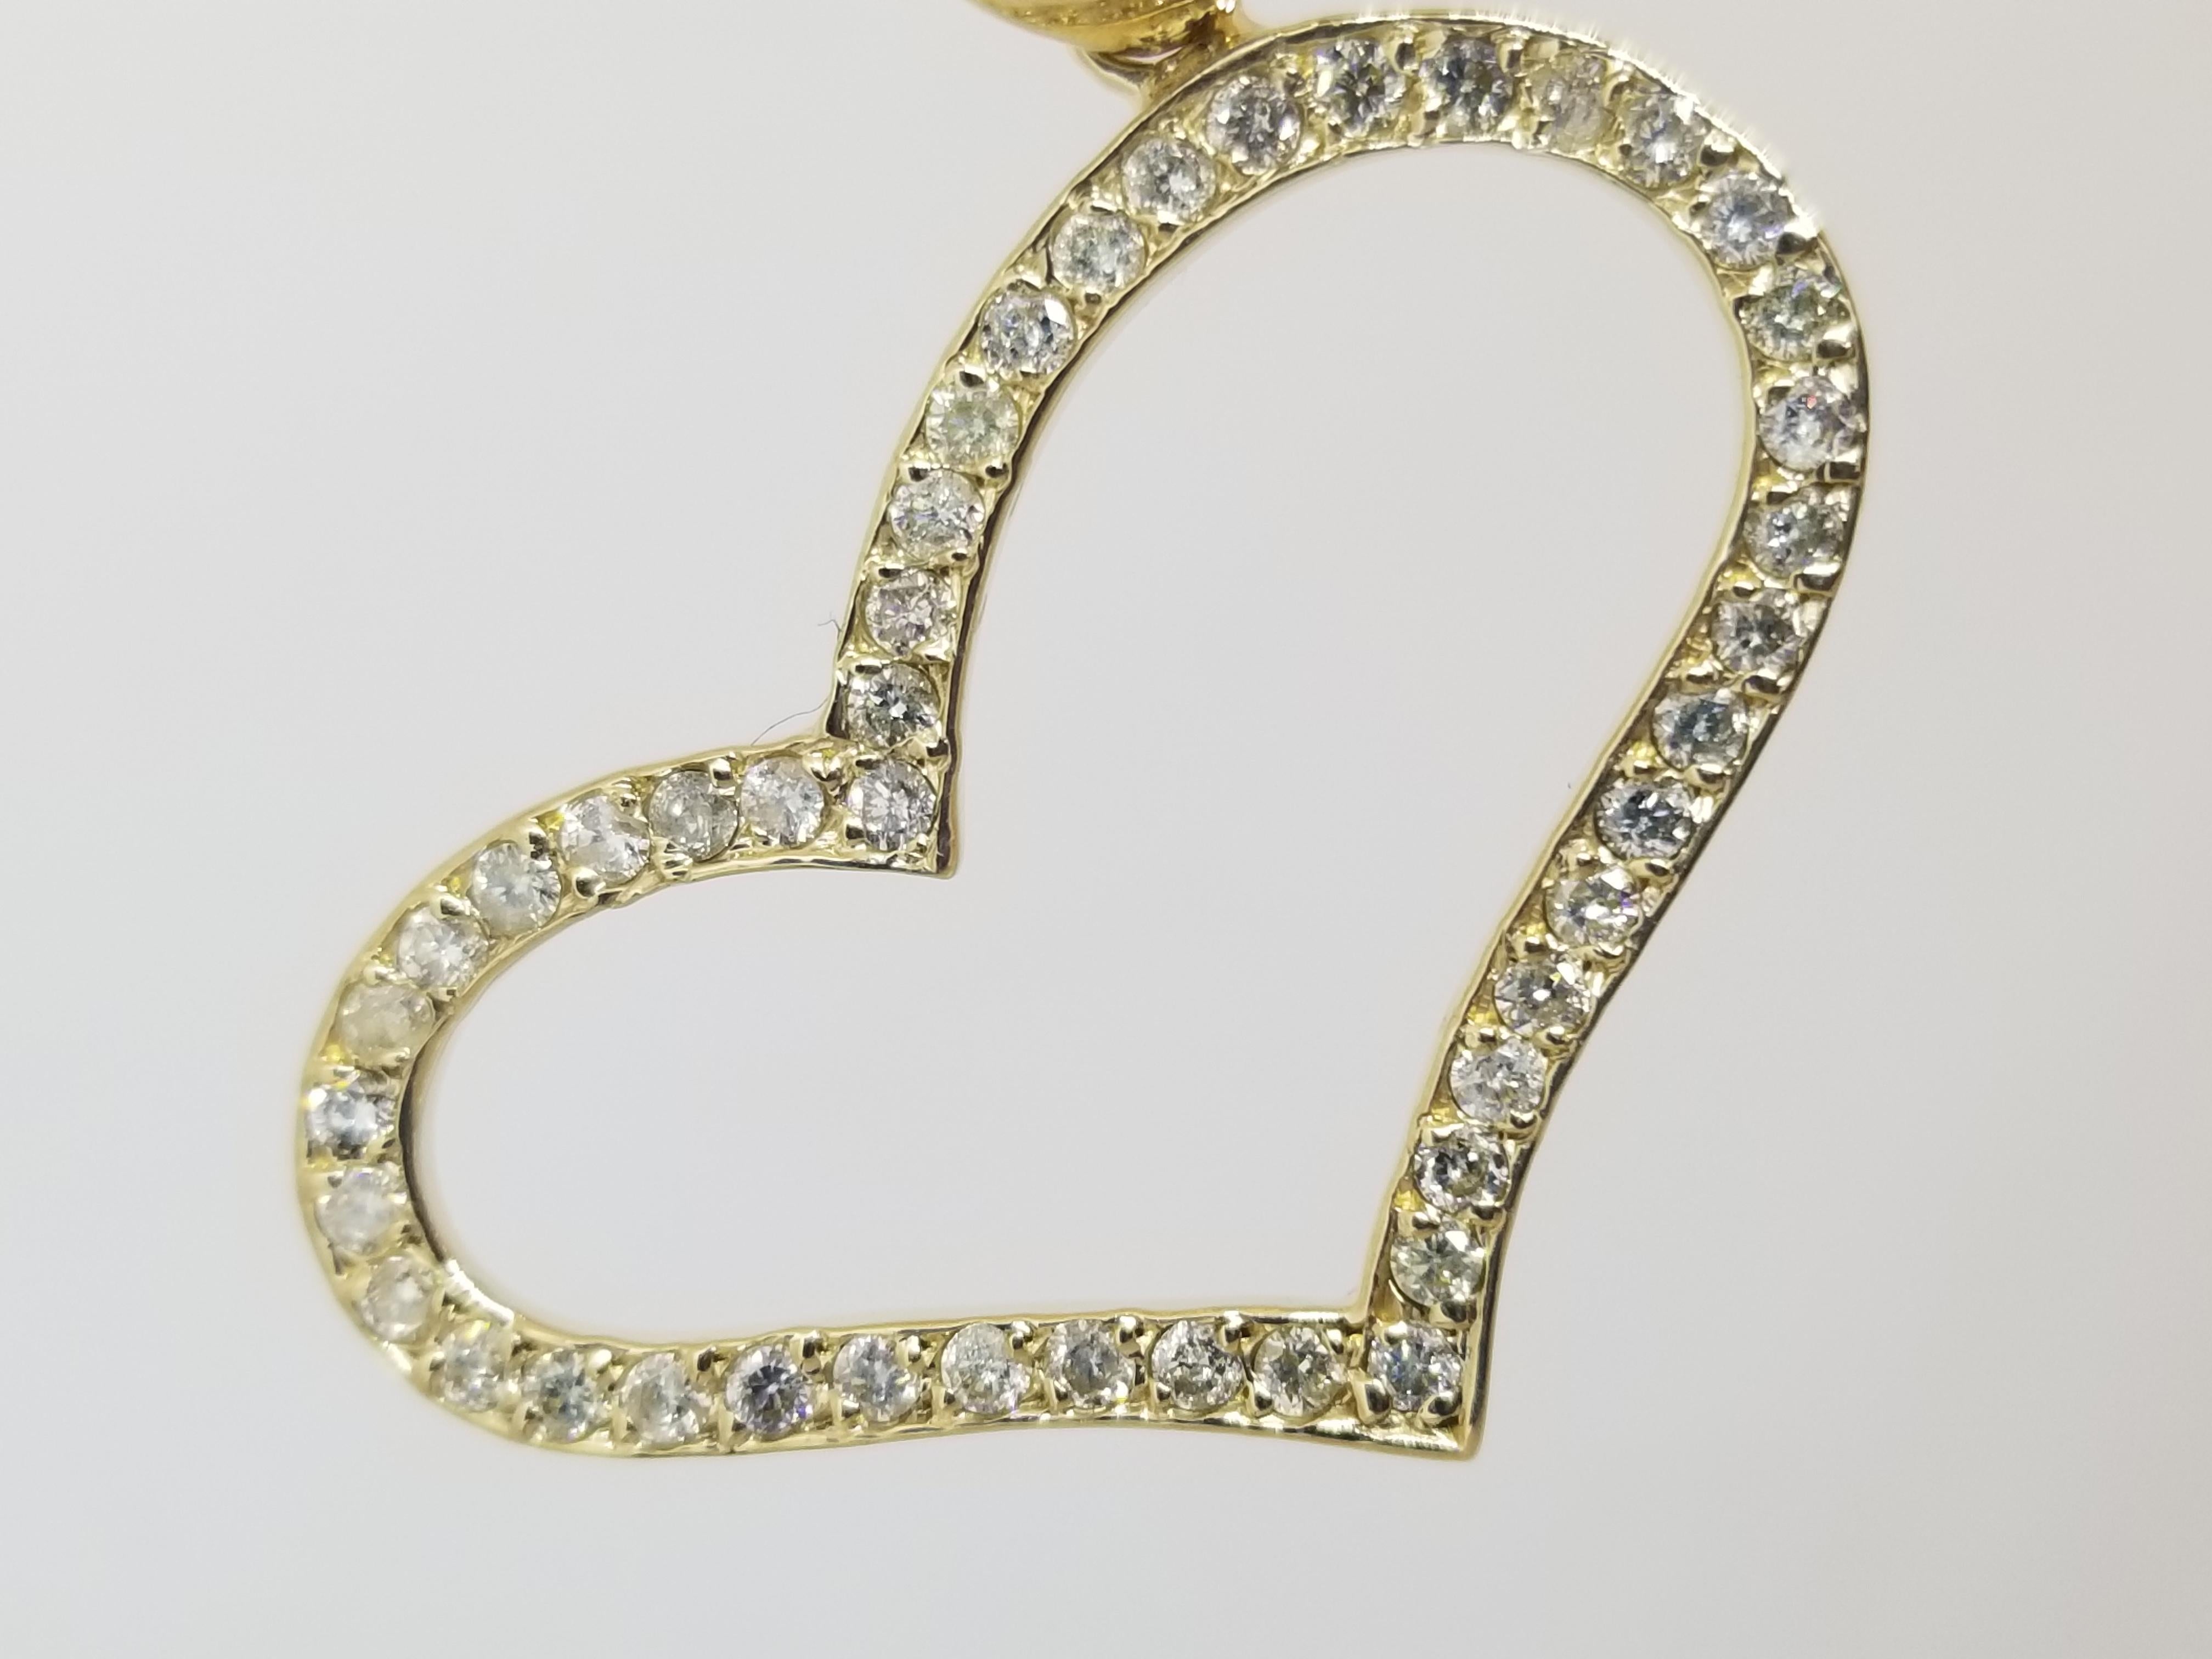 Very shiny, 0.71 ct heart shape pendant 14k yellow gold. natural diamonds.
Average Color I, Clarity I